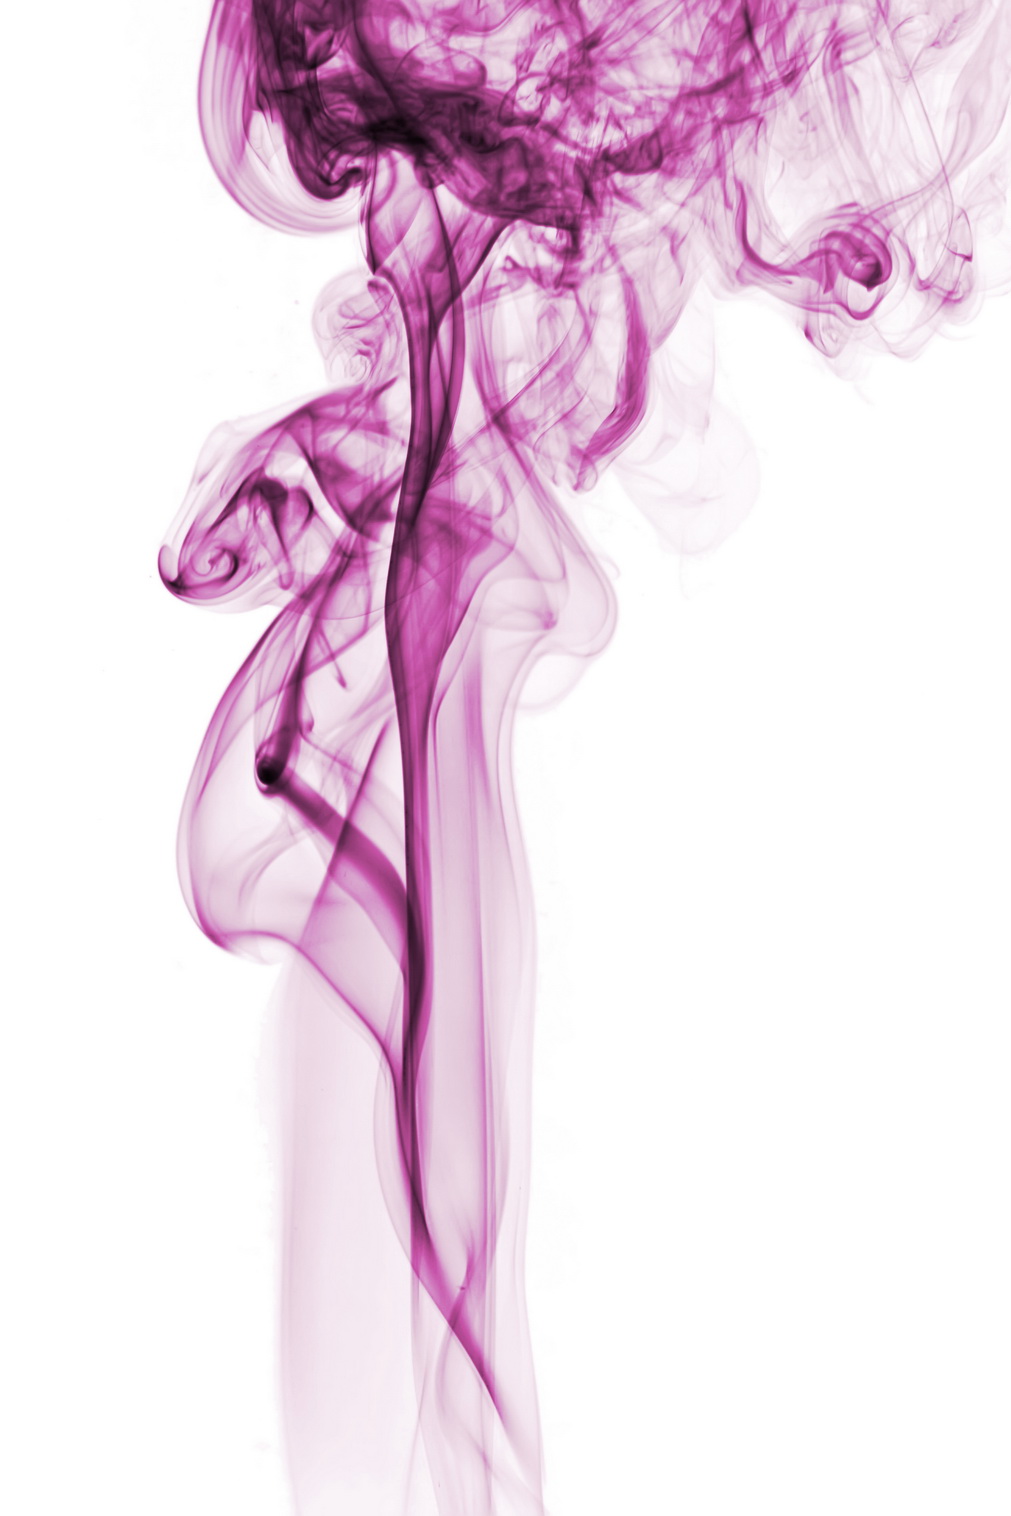 violet smoke, Abstract, Smoke, Magic, Magical, HQ Photo